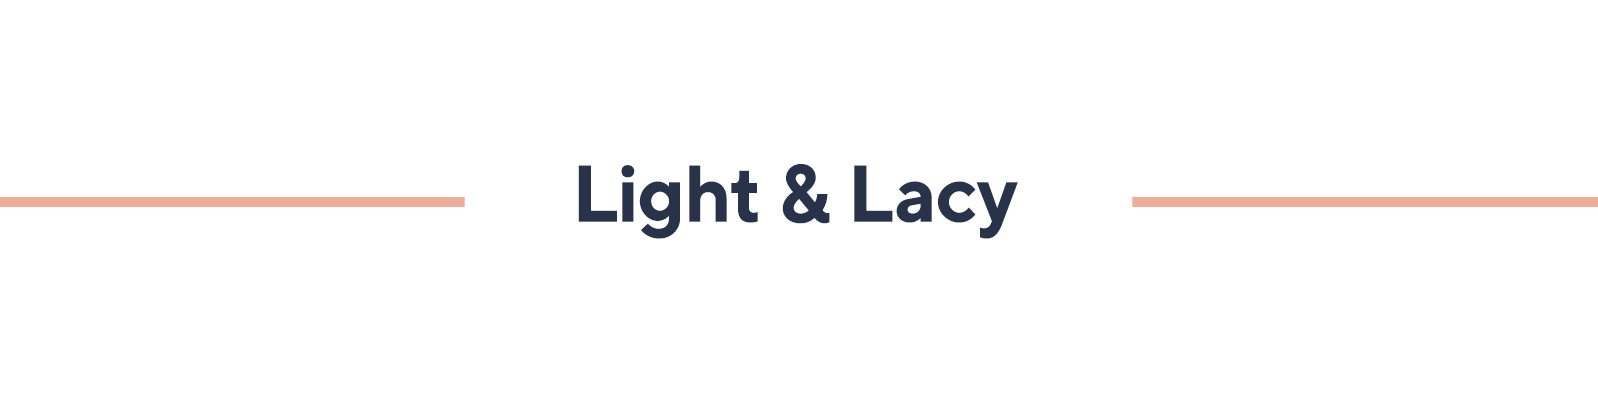 Light & Lacy